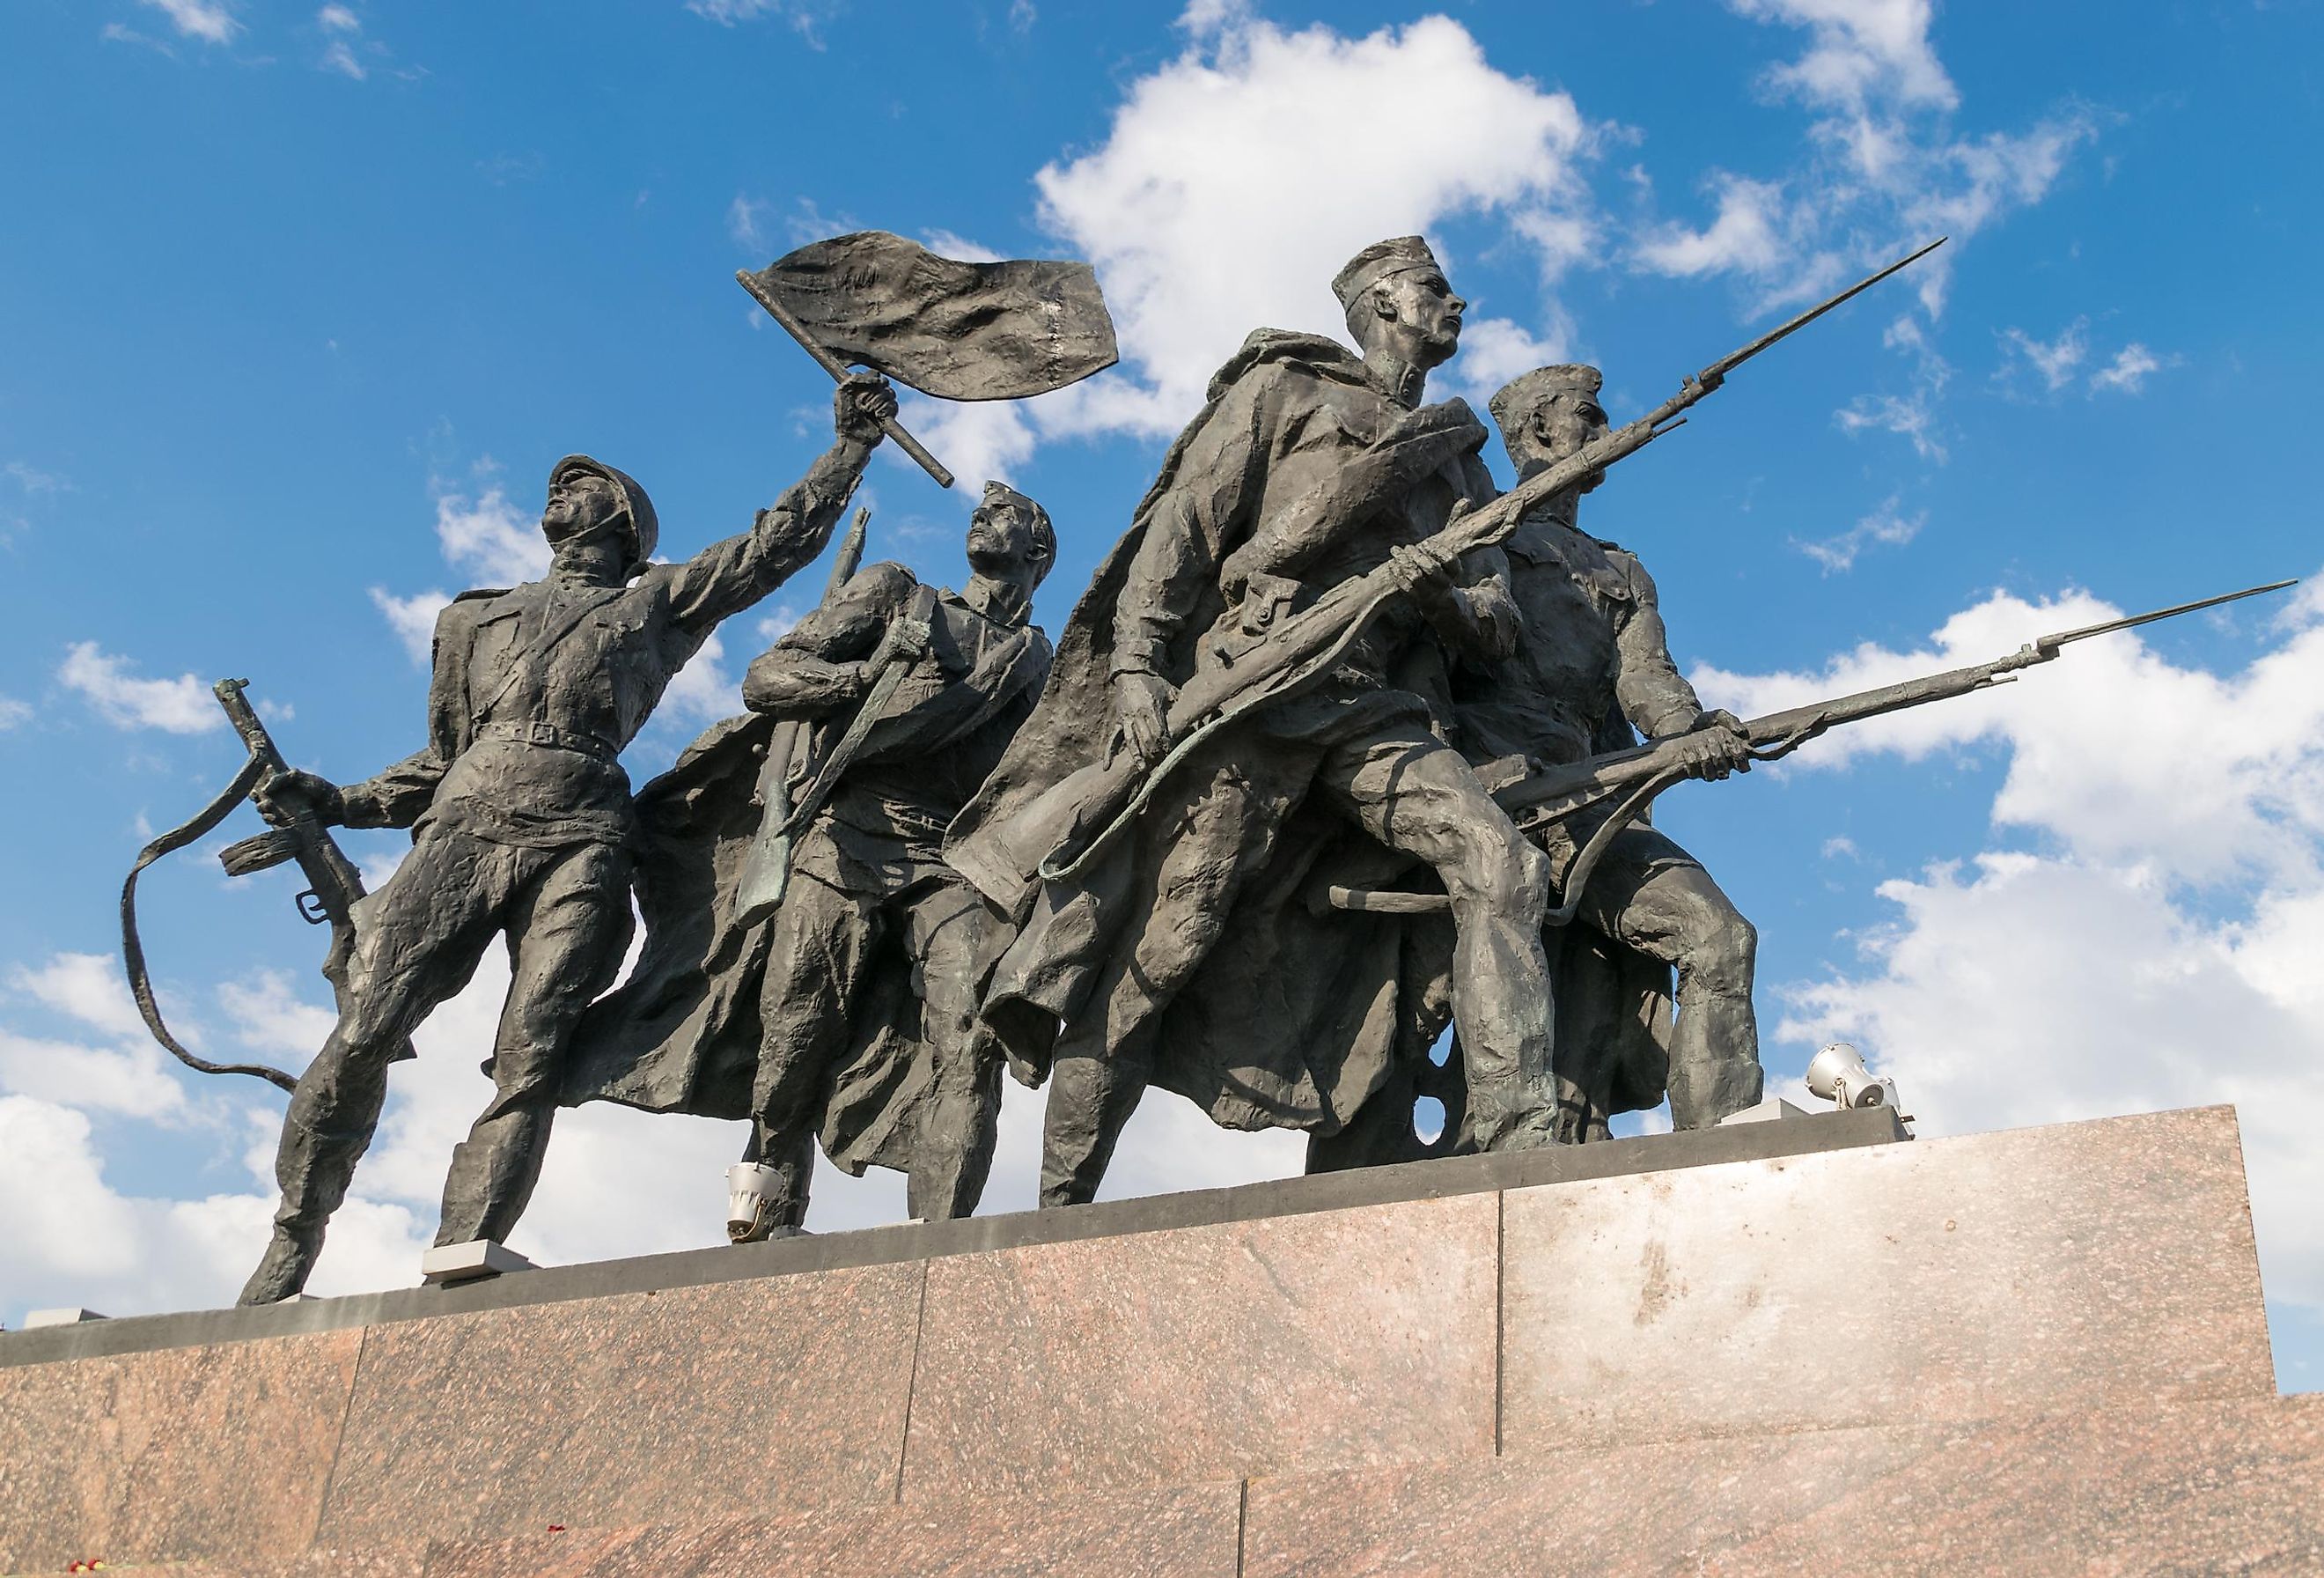 Monument "Heroic defenders of Leningrad" on Victory Square, Saint Petersburg.